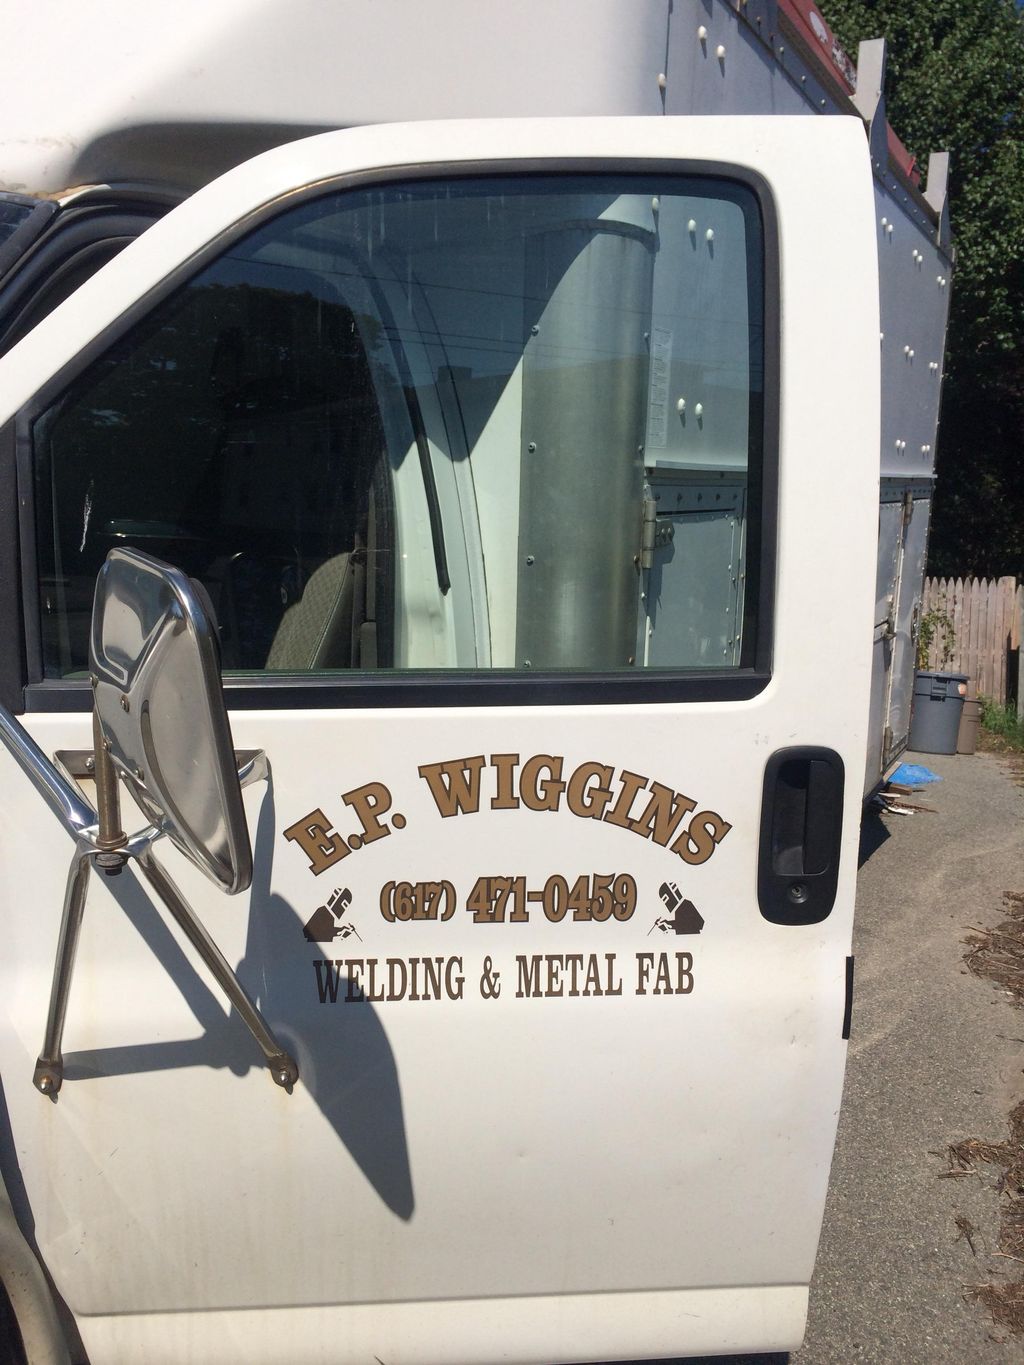 E.P. Wiggins Welding And Metal Fab.